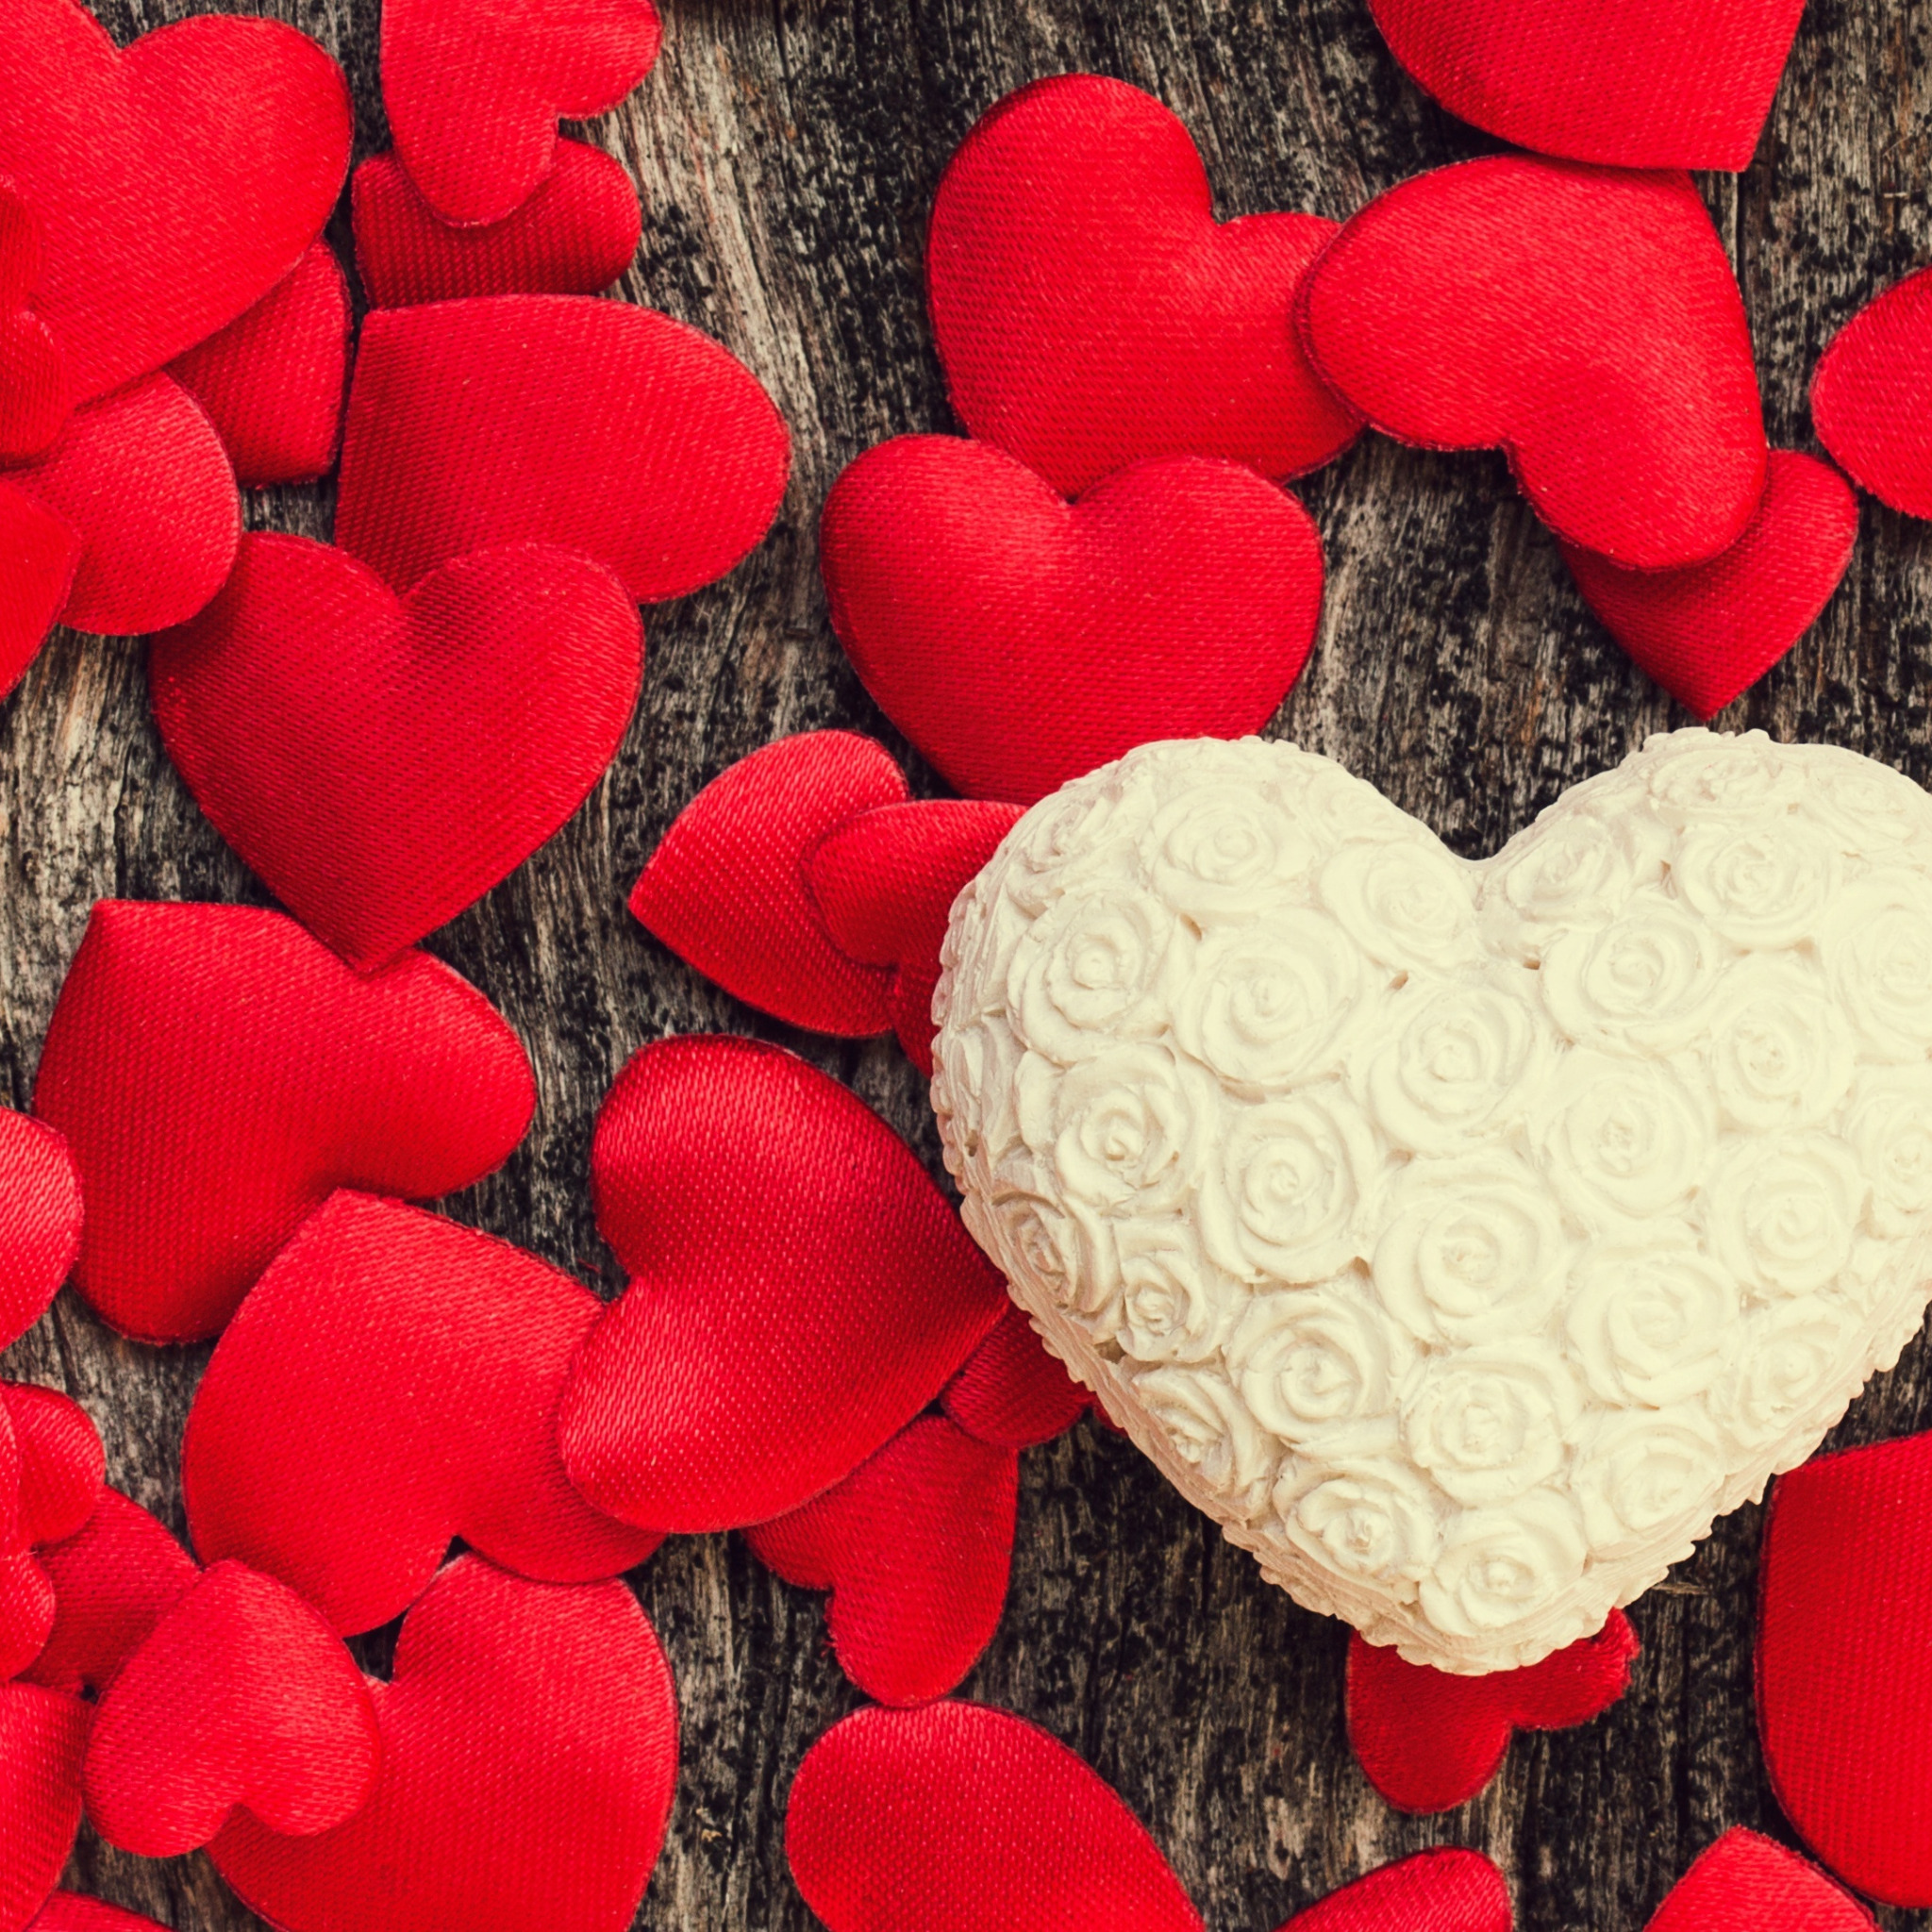 Love valentine s. Красивое сердце. Красивые сердечки. Фото сердечко. Картинки на рабочий стол сердечки.